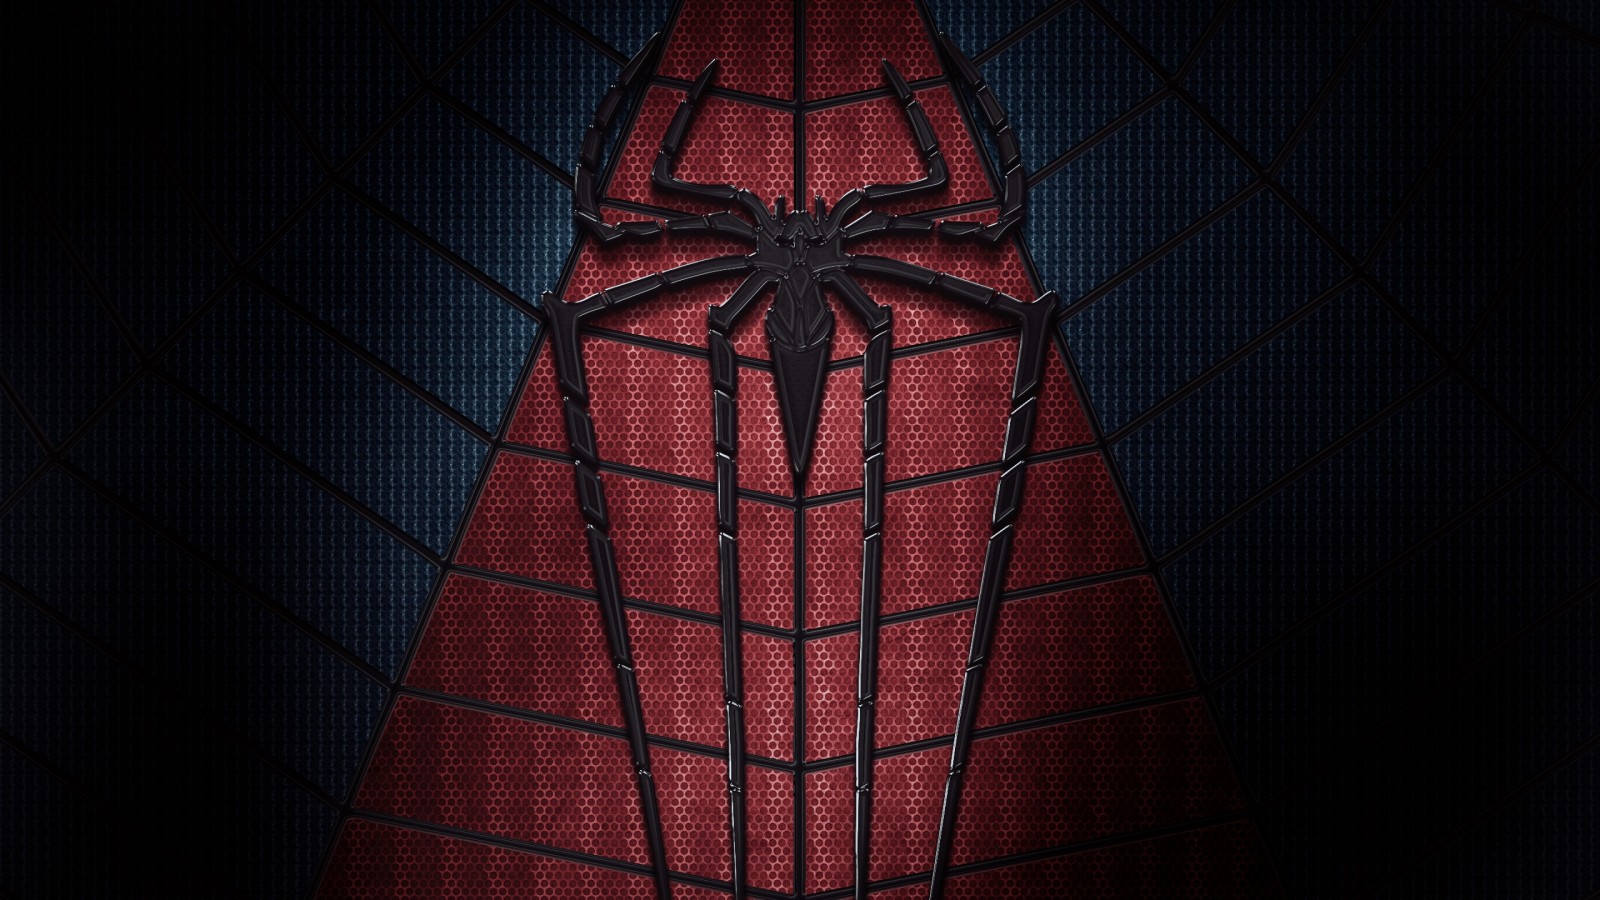 Spider_Man_Marvel_Comics_comics_spider_superhero_logo_dark-50043.jpg!d.jpg